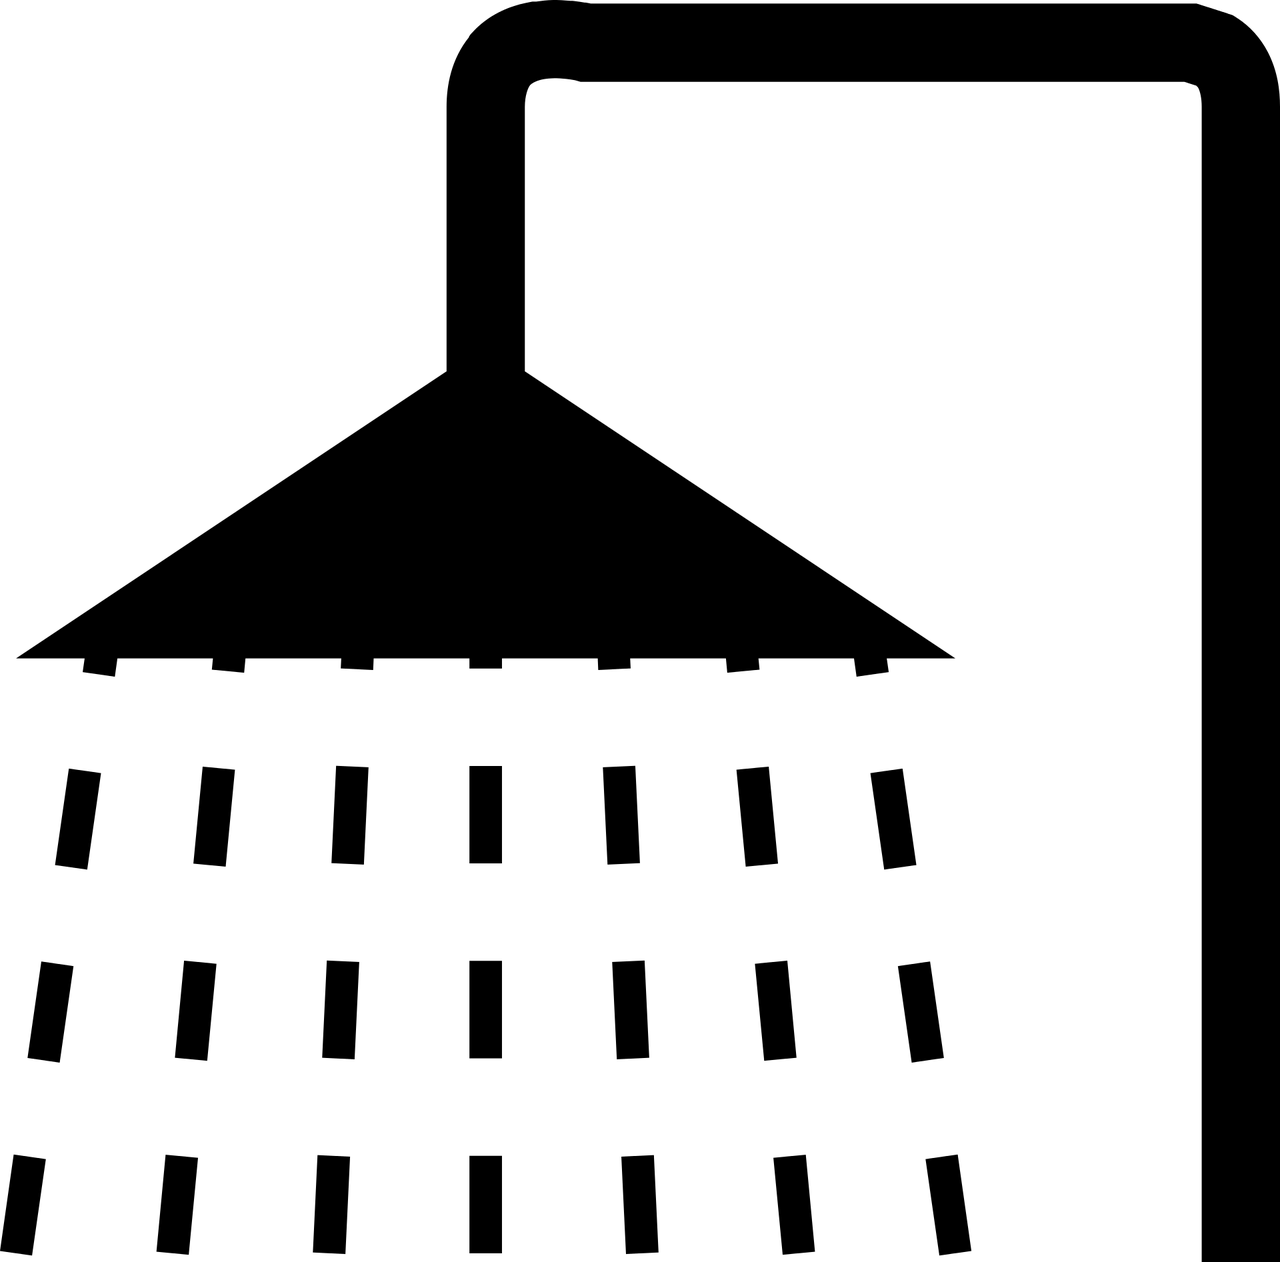 Solardusche - สัญลักษณ์ ห้อง อาบ น้ำ (1280x1262)